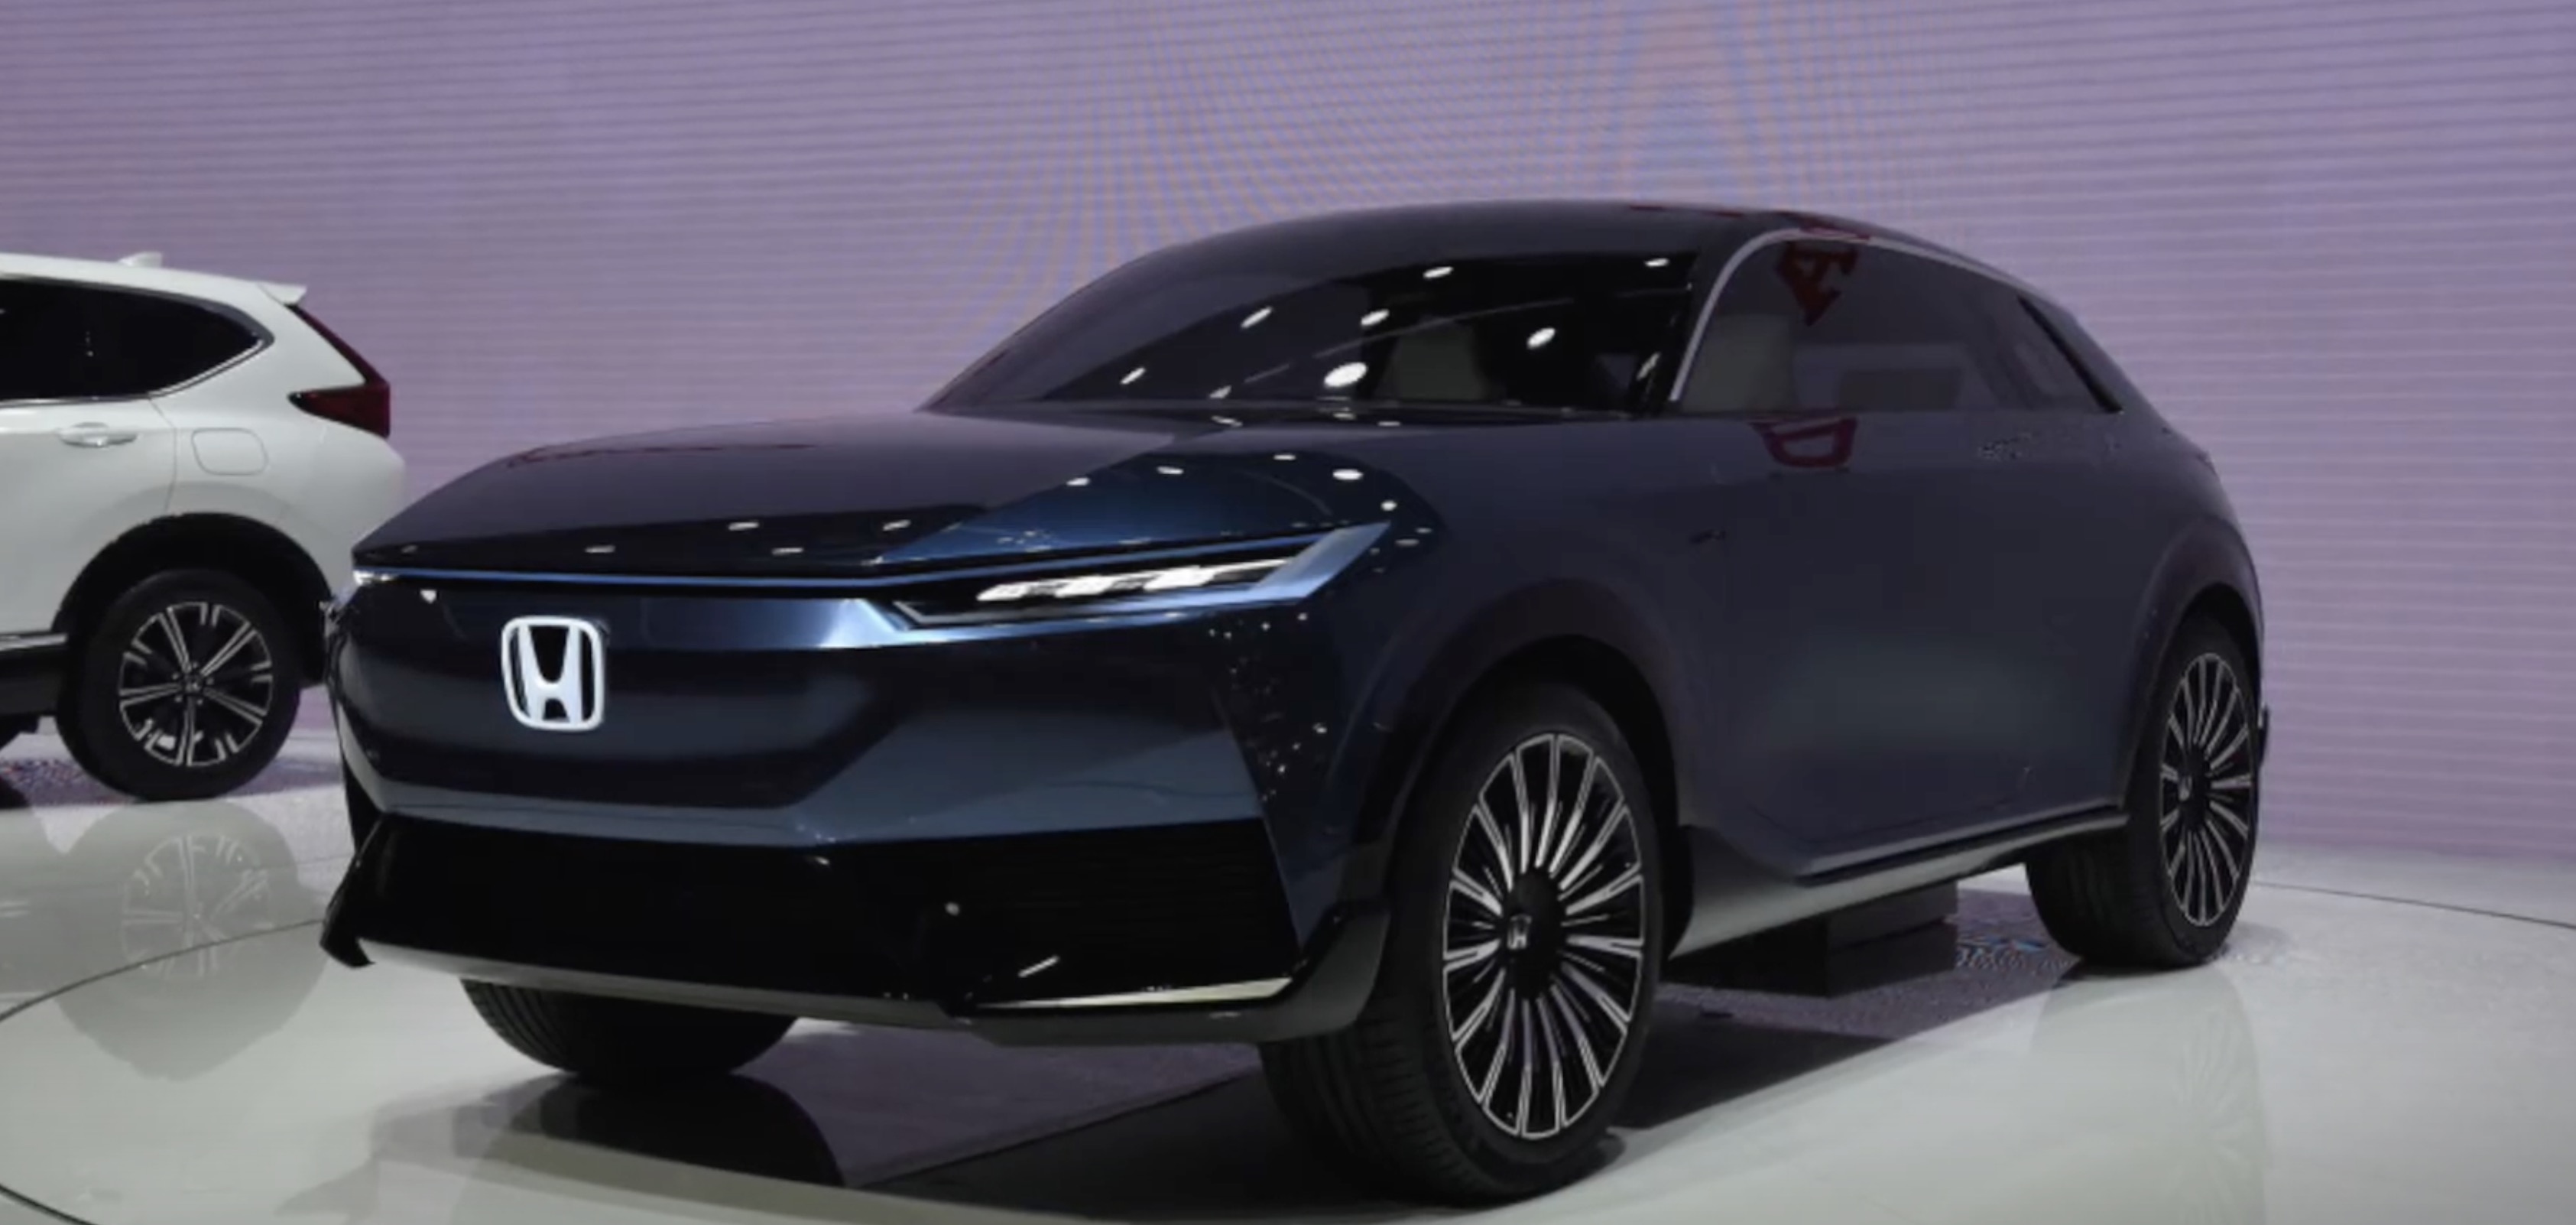 Honda unveils sleek new electric SUV concept, showing ‘future mass